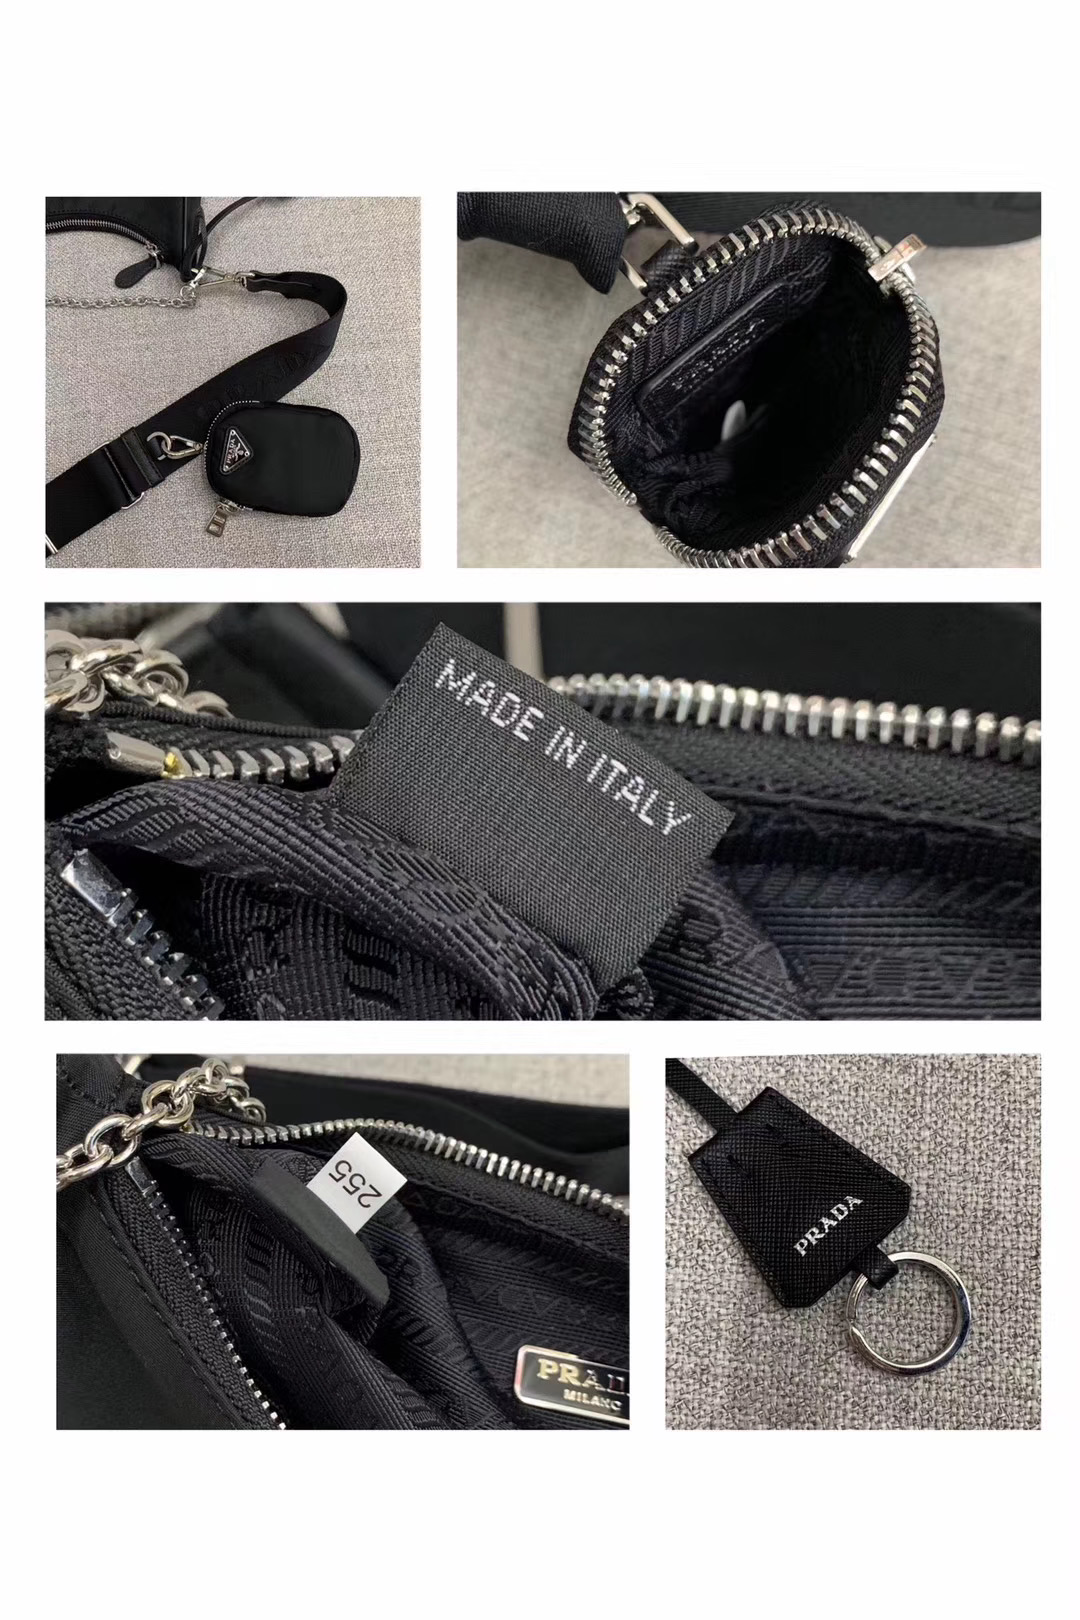 Prada Re-Edition 2005 nylon shoulder bag 1BH204 black